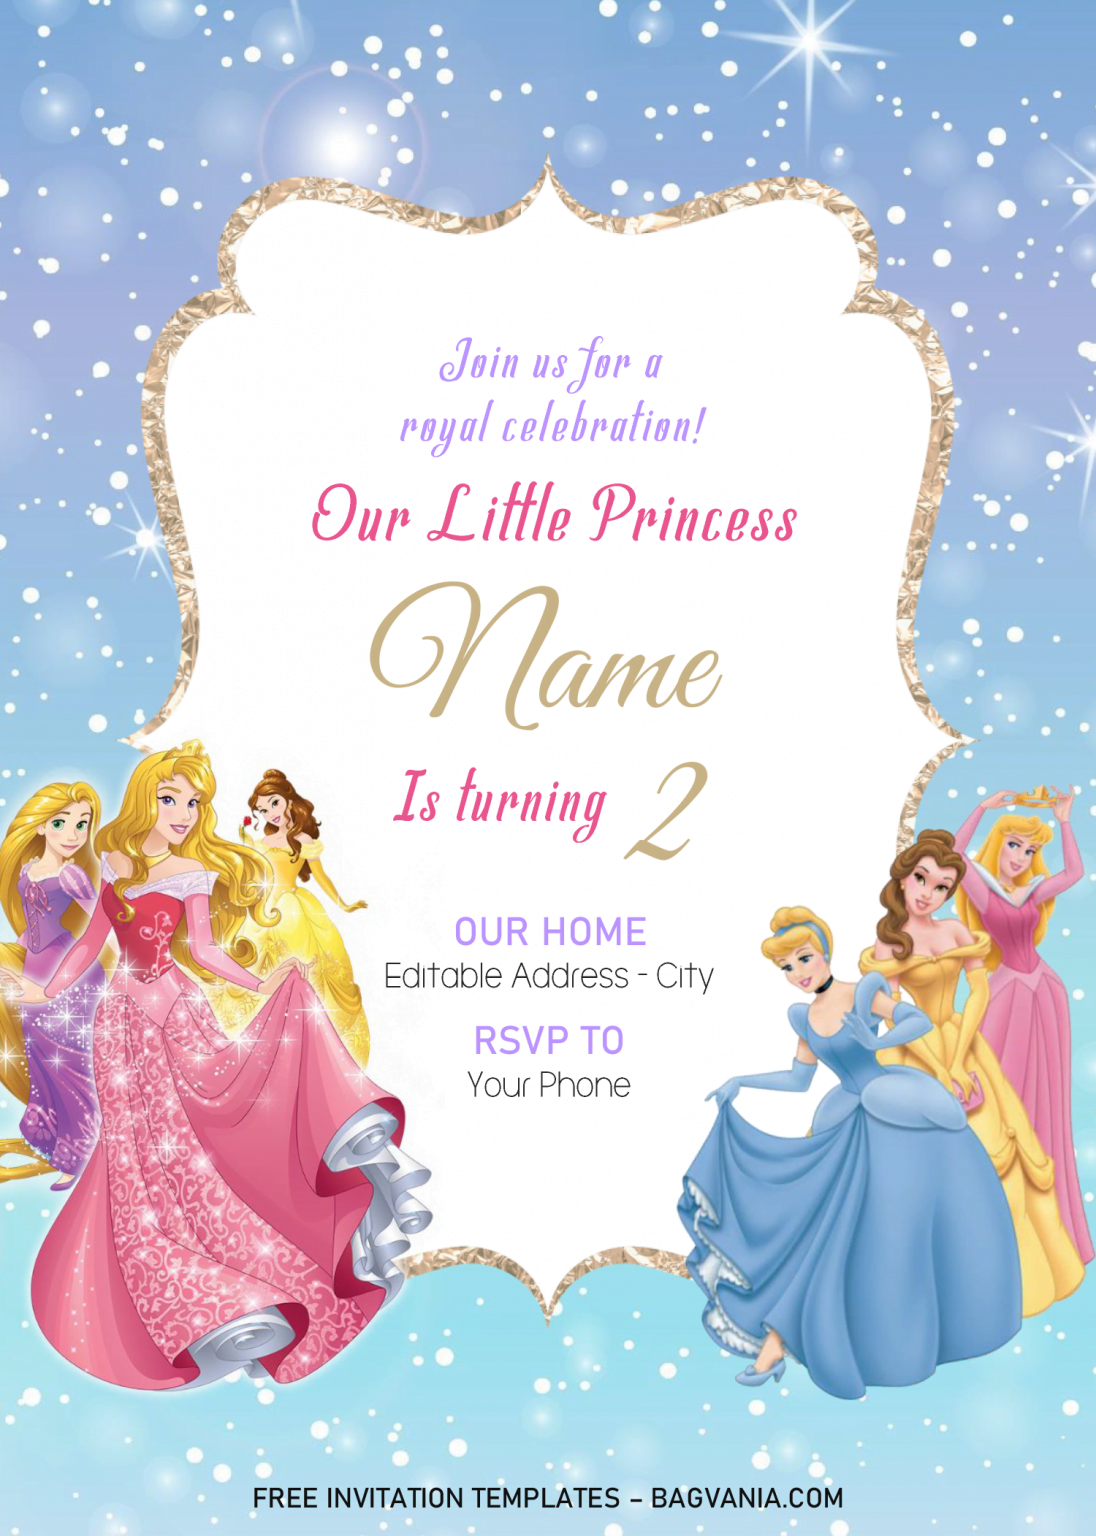 Disney Princess Invitation Templates – Editable With MS Word | FREE